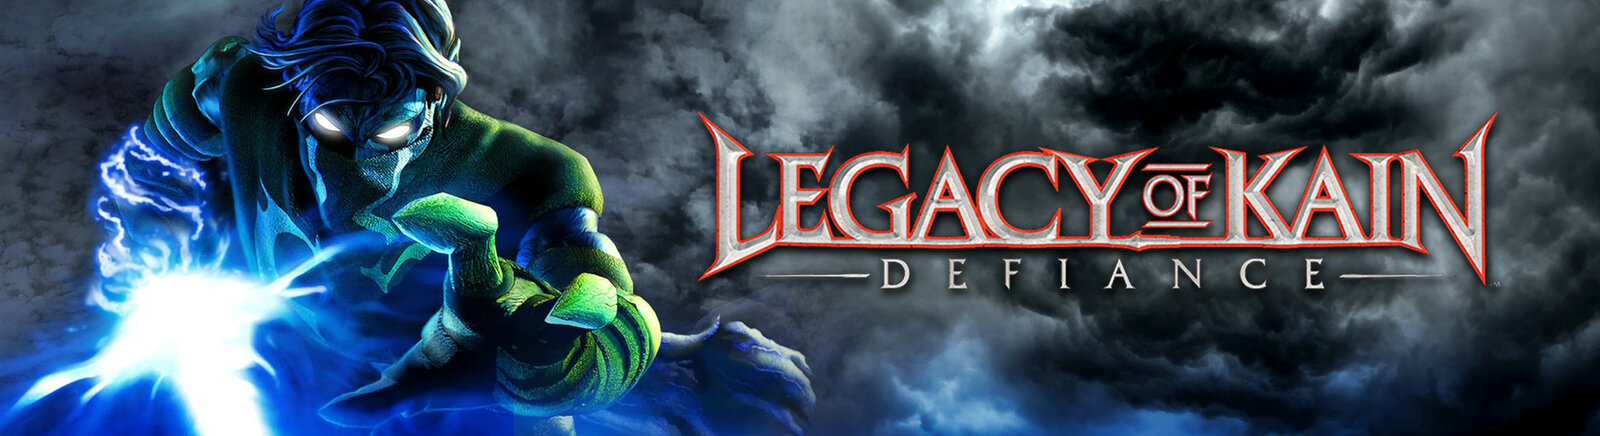 Дата выхода Legacy of Kain: Defiance  на PC, PS2 и Xbox в России и во всем мире